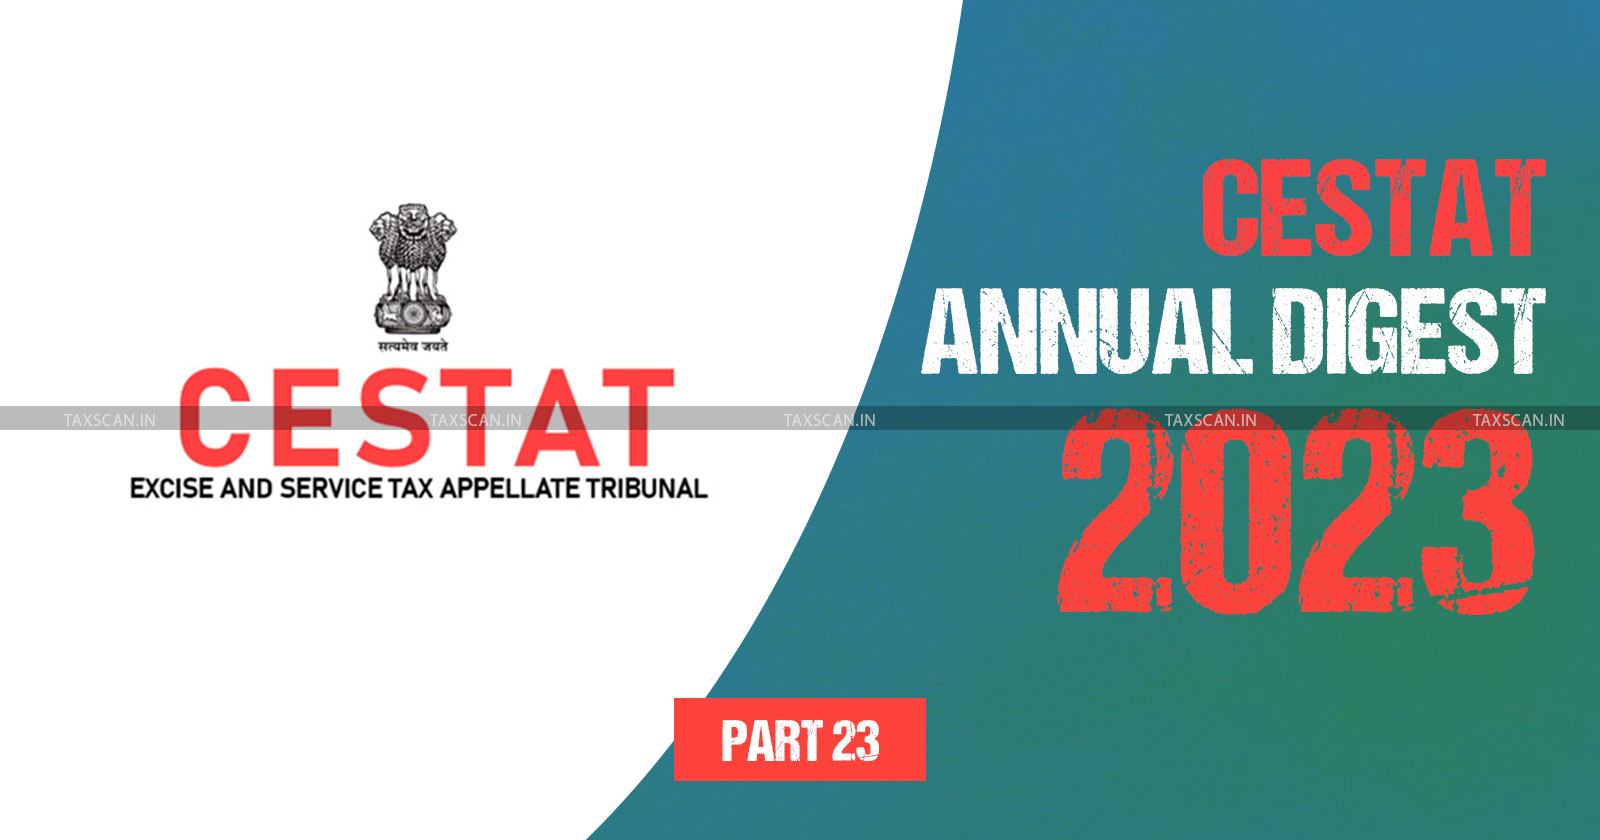 Annual Digest 2023 - CESTAT Annual Digest 2023 - cestat - TAXSCAN